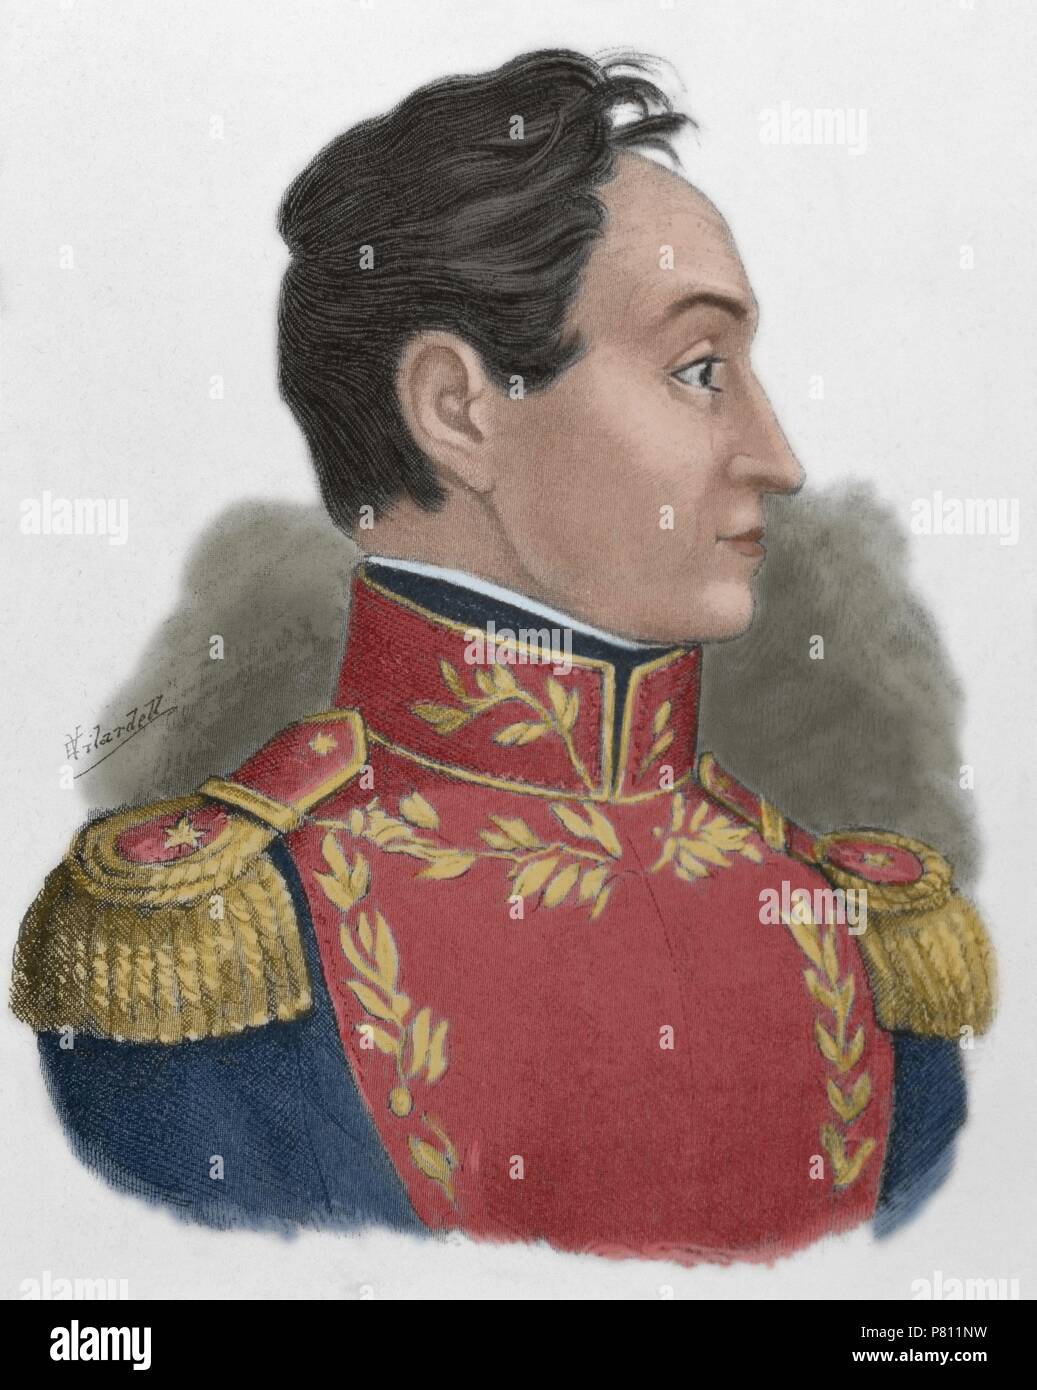 Simon Bolivar (1793-1830). Military and Venezuelan statesman called "The Liberator". Portrait.  Engraving in "Americanos Celebres", 1888. by E. Vilardell. Colored. Stock Photo